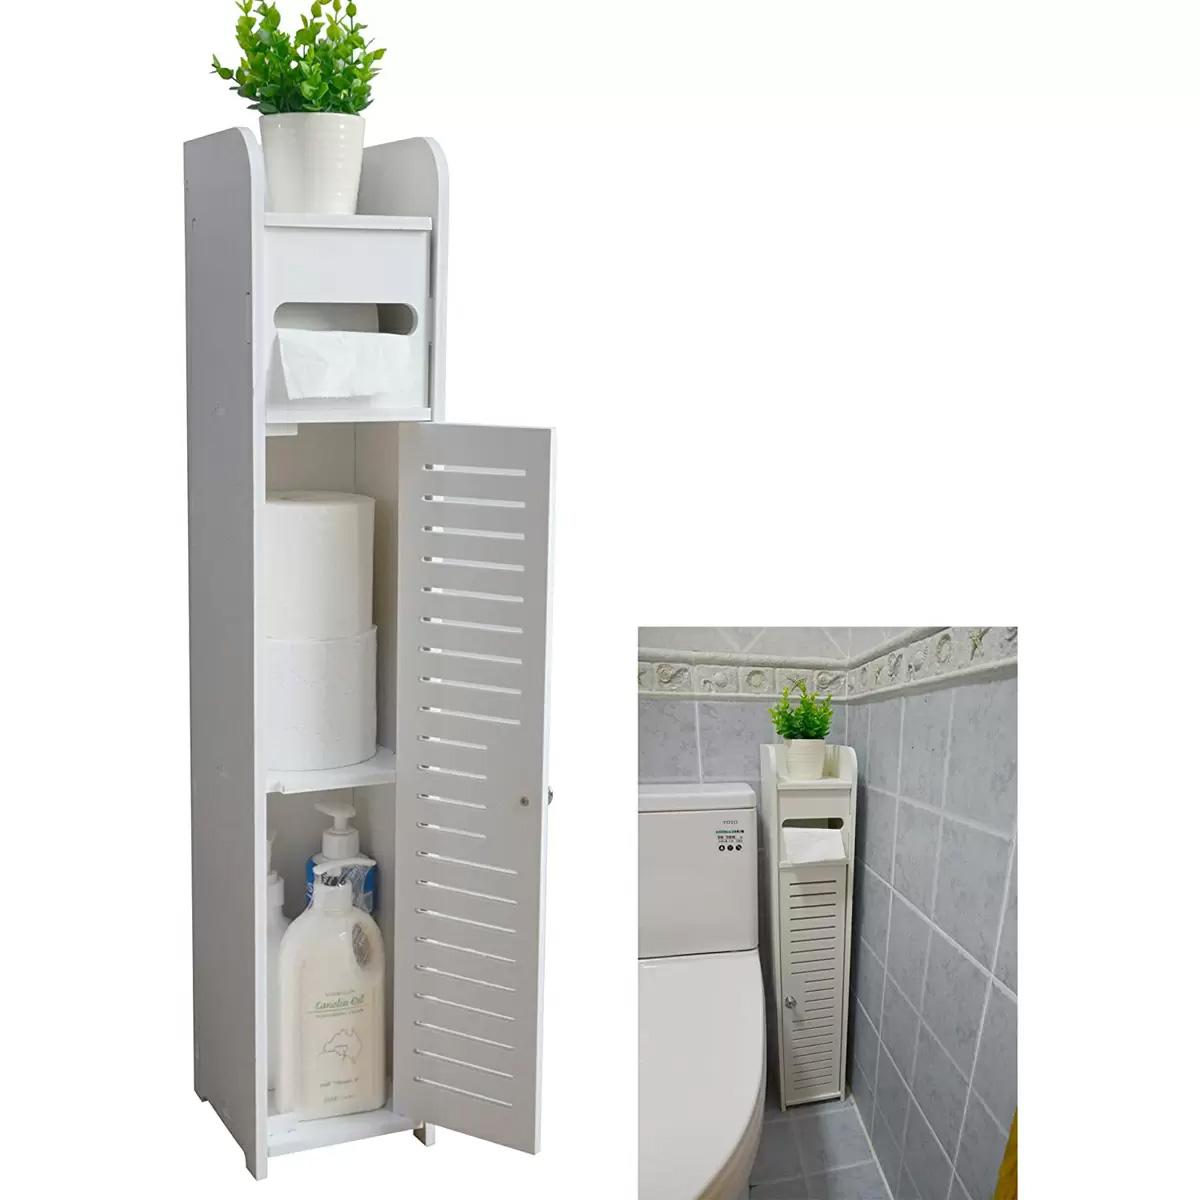 Aojezor Small Bathroom Storage Corner Vanity Cabinet for $17.99 Shipped